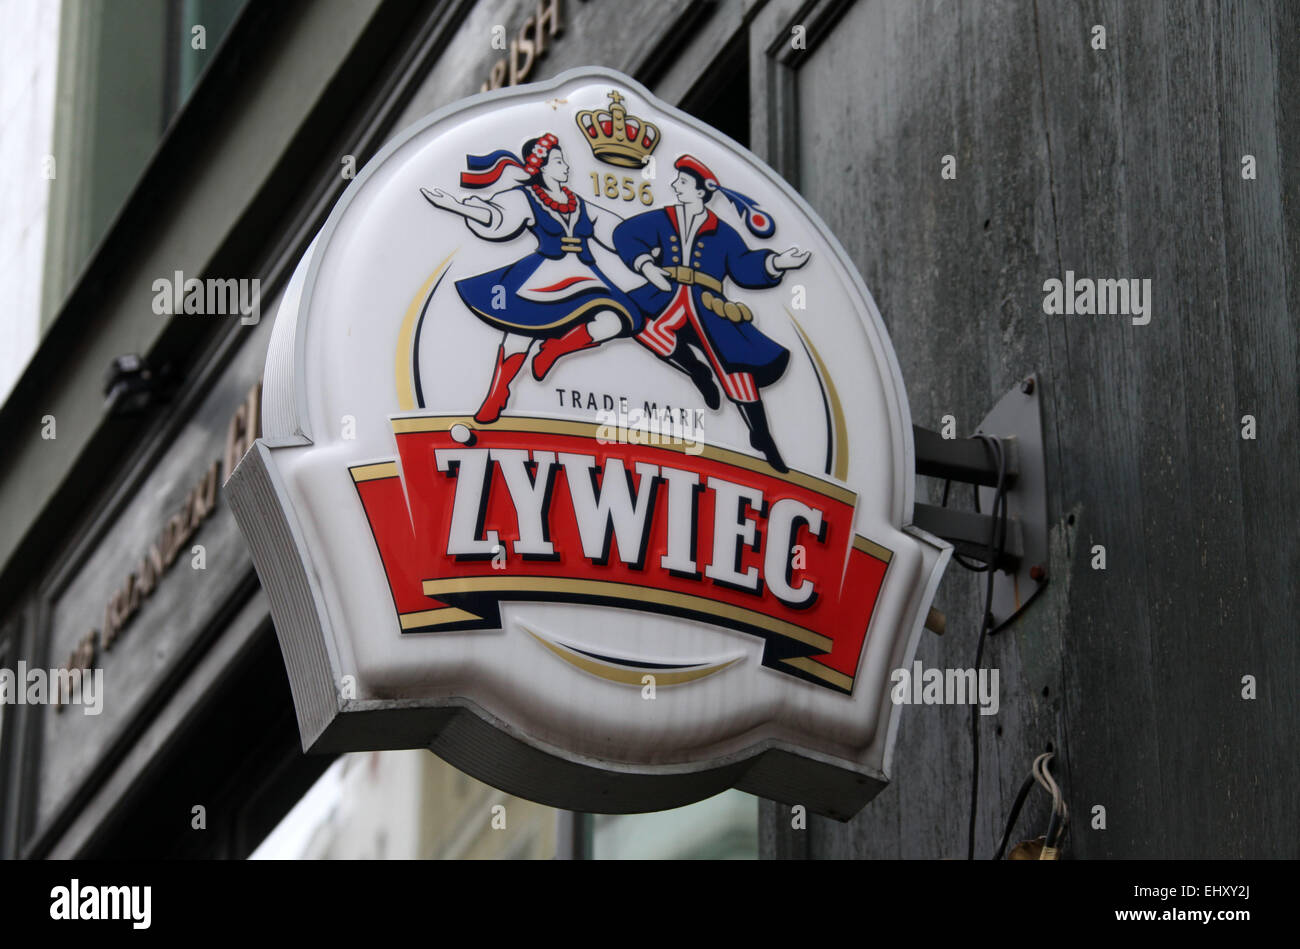 Zywiec Brewery Sign in Wroclaw Stock Photo